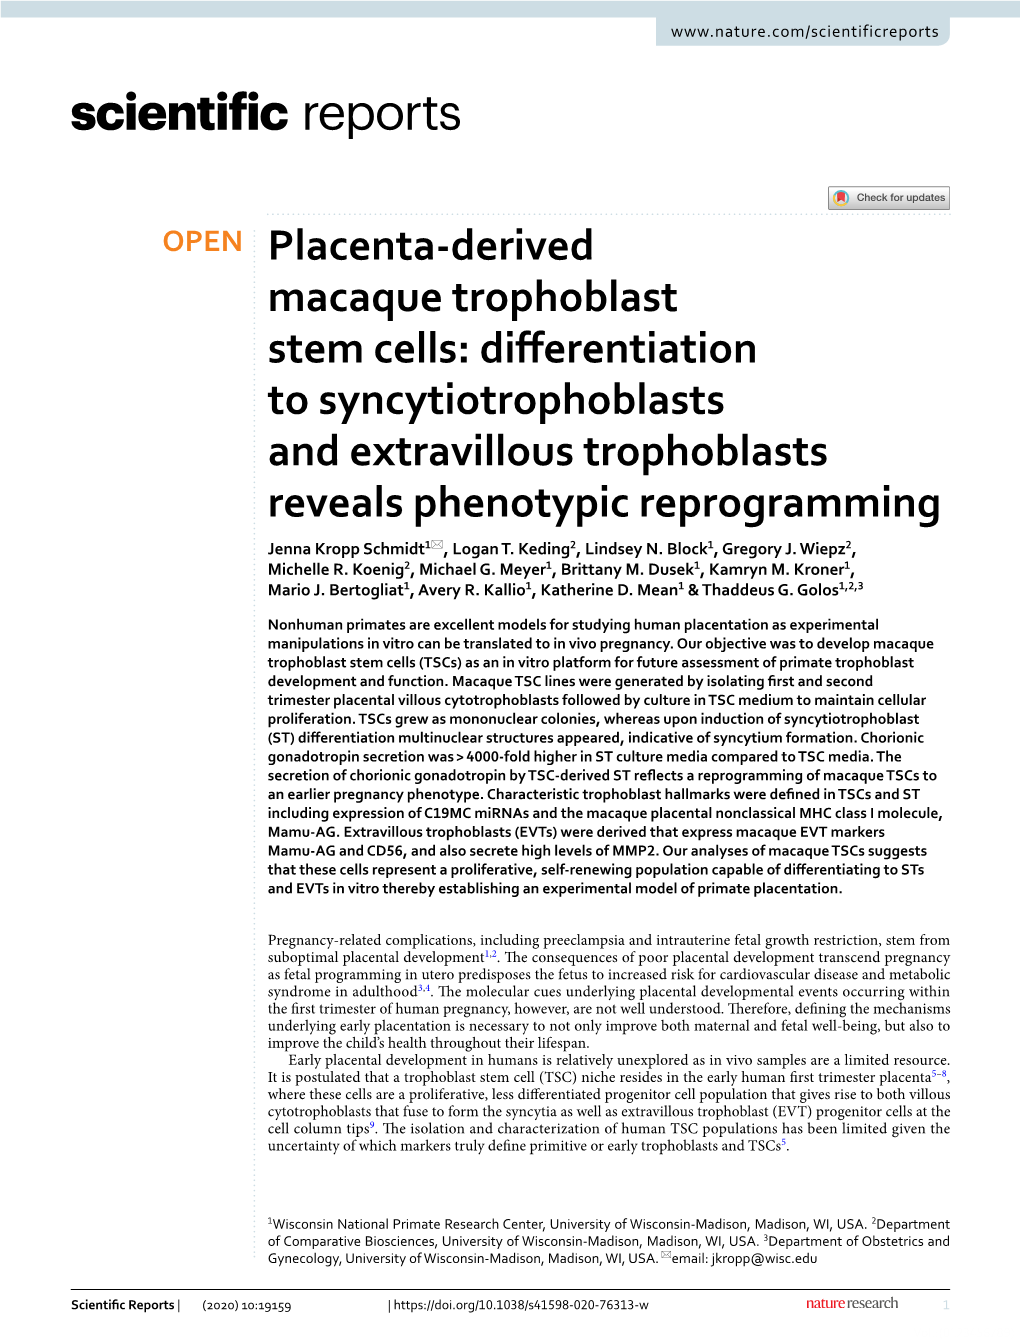 Placenta-Derived Macaque Trophoblast Stem Cells